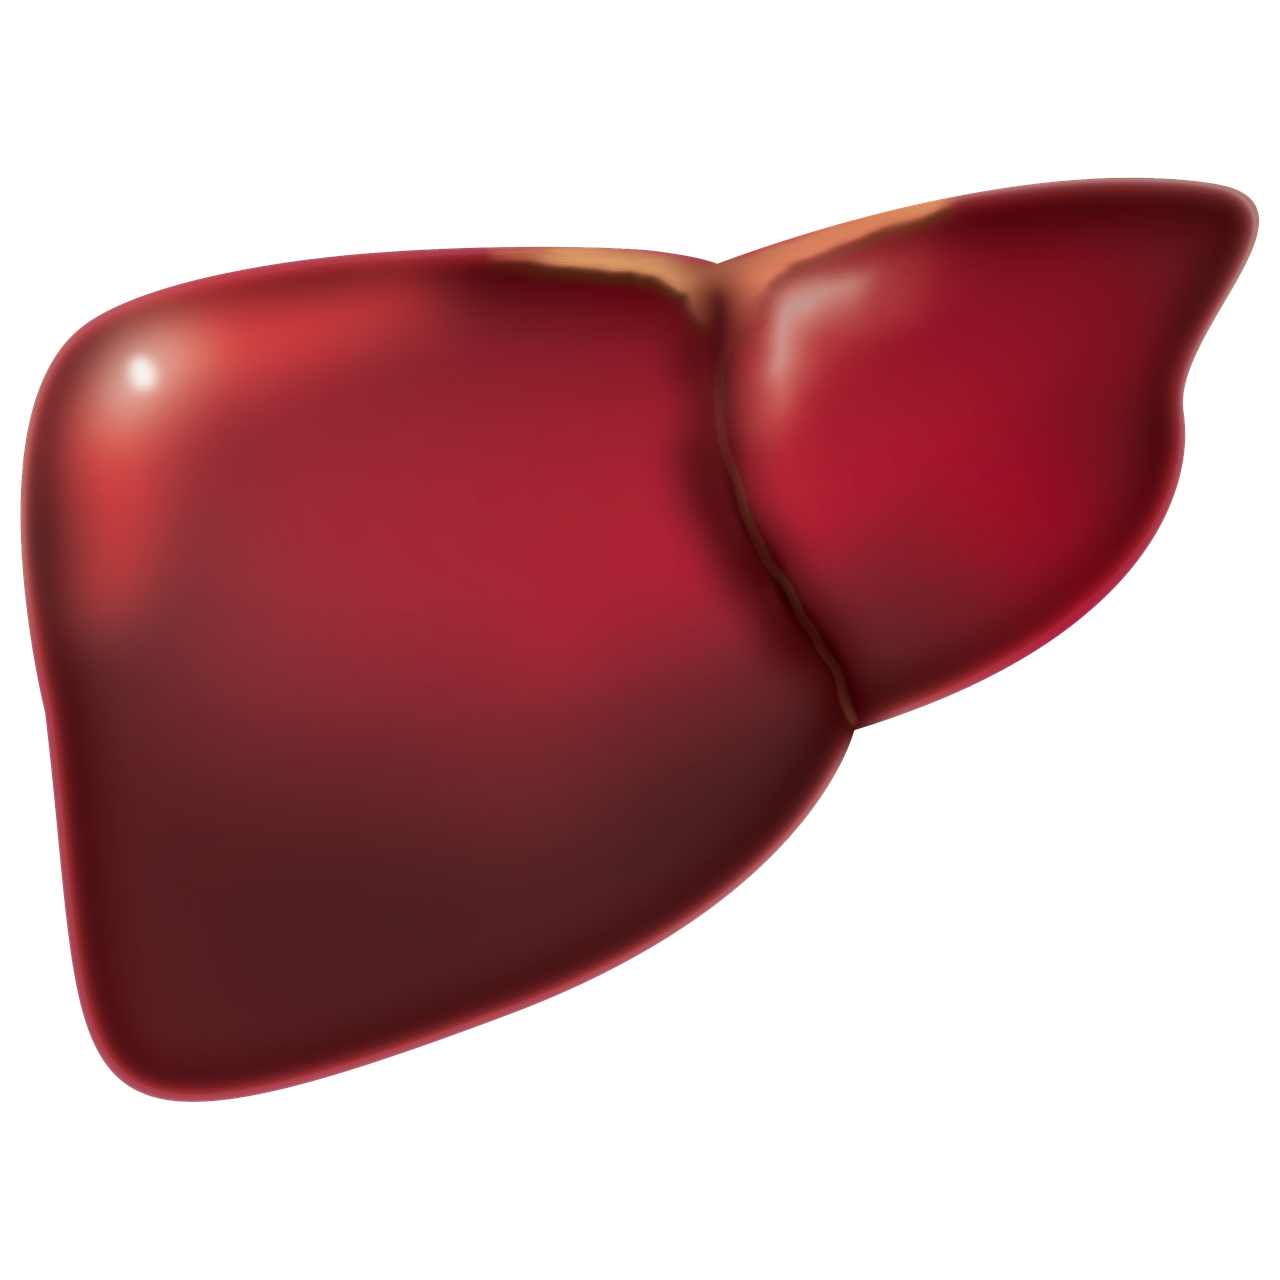 2021 ILTS共识文件：终末期肝病患者肝移植过程中血流动力学不稳定的管理